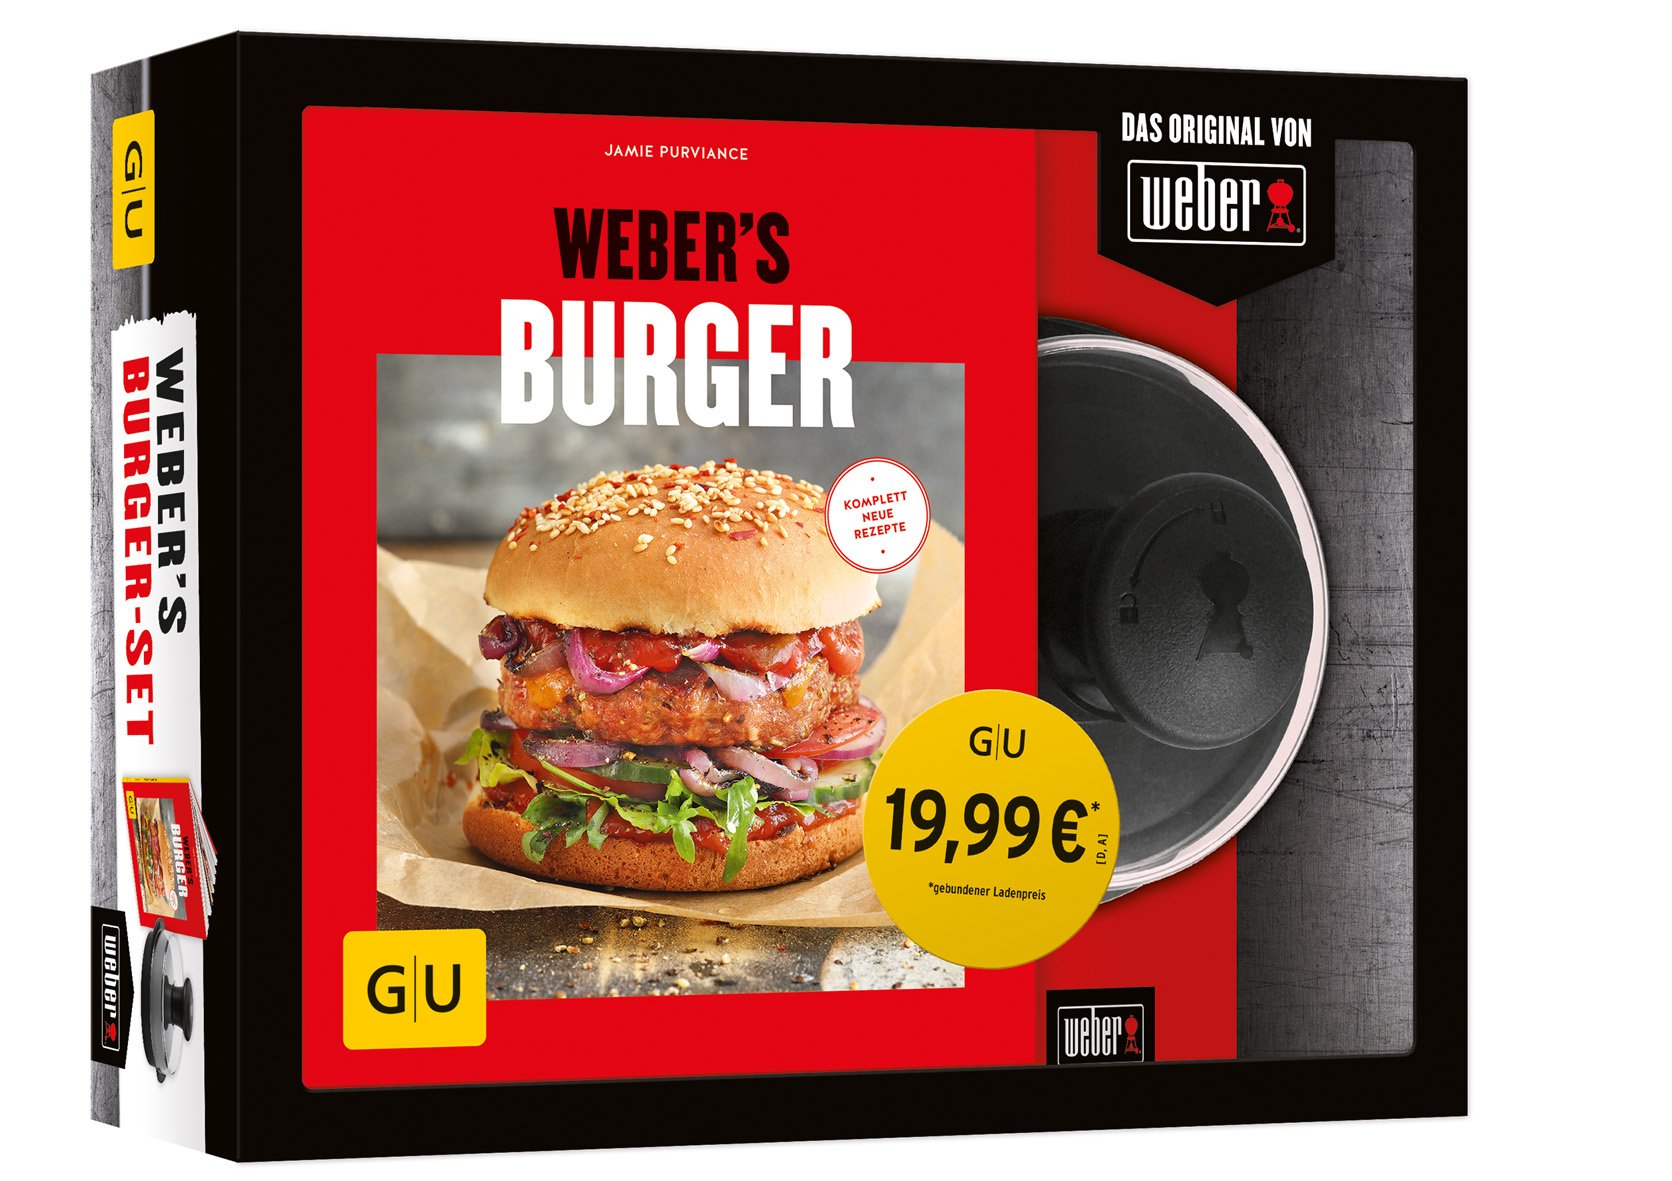 MIB weber Burger